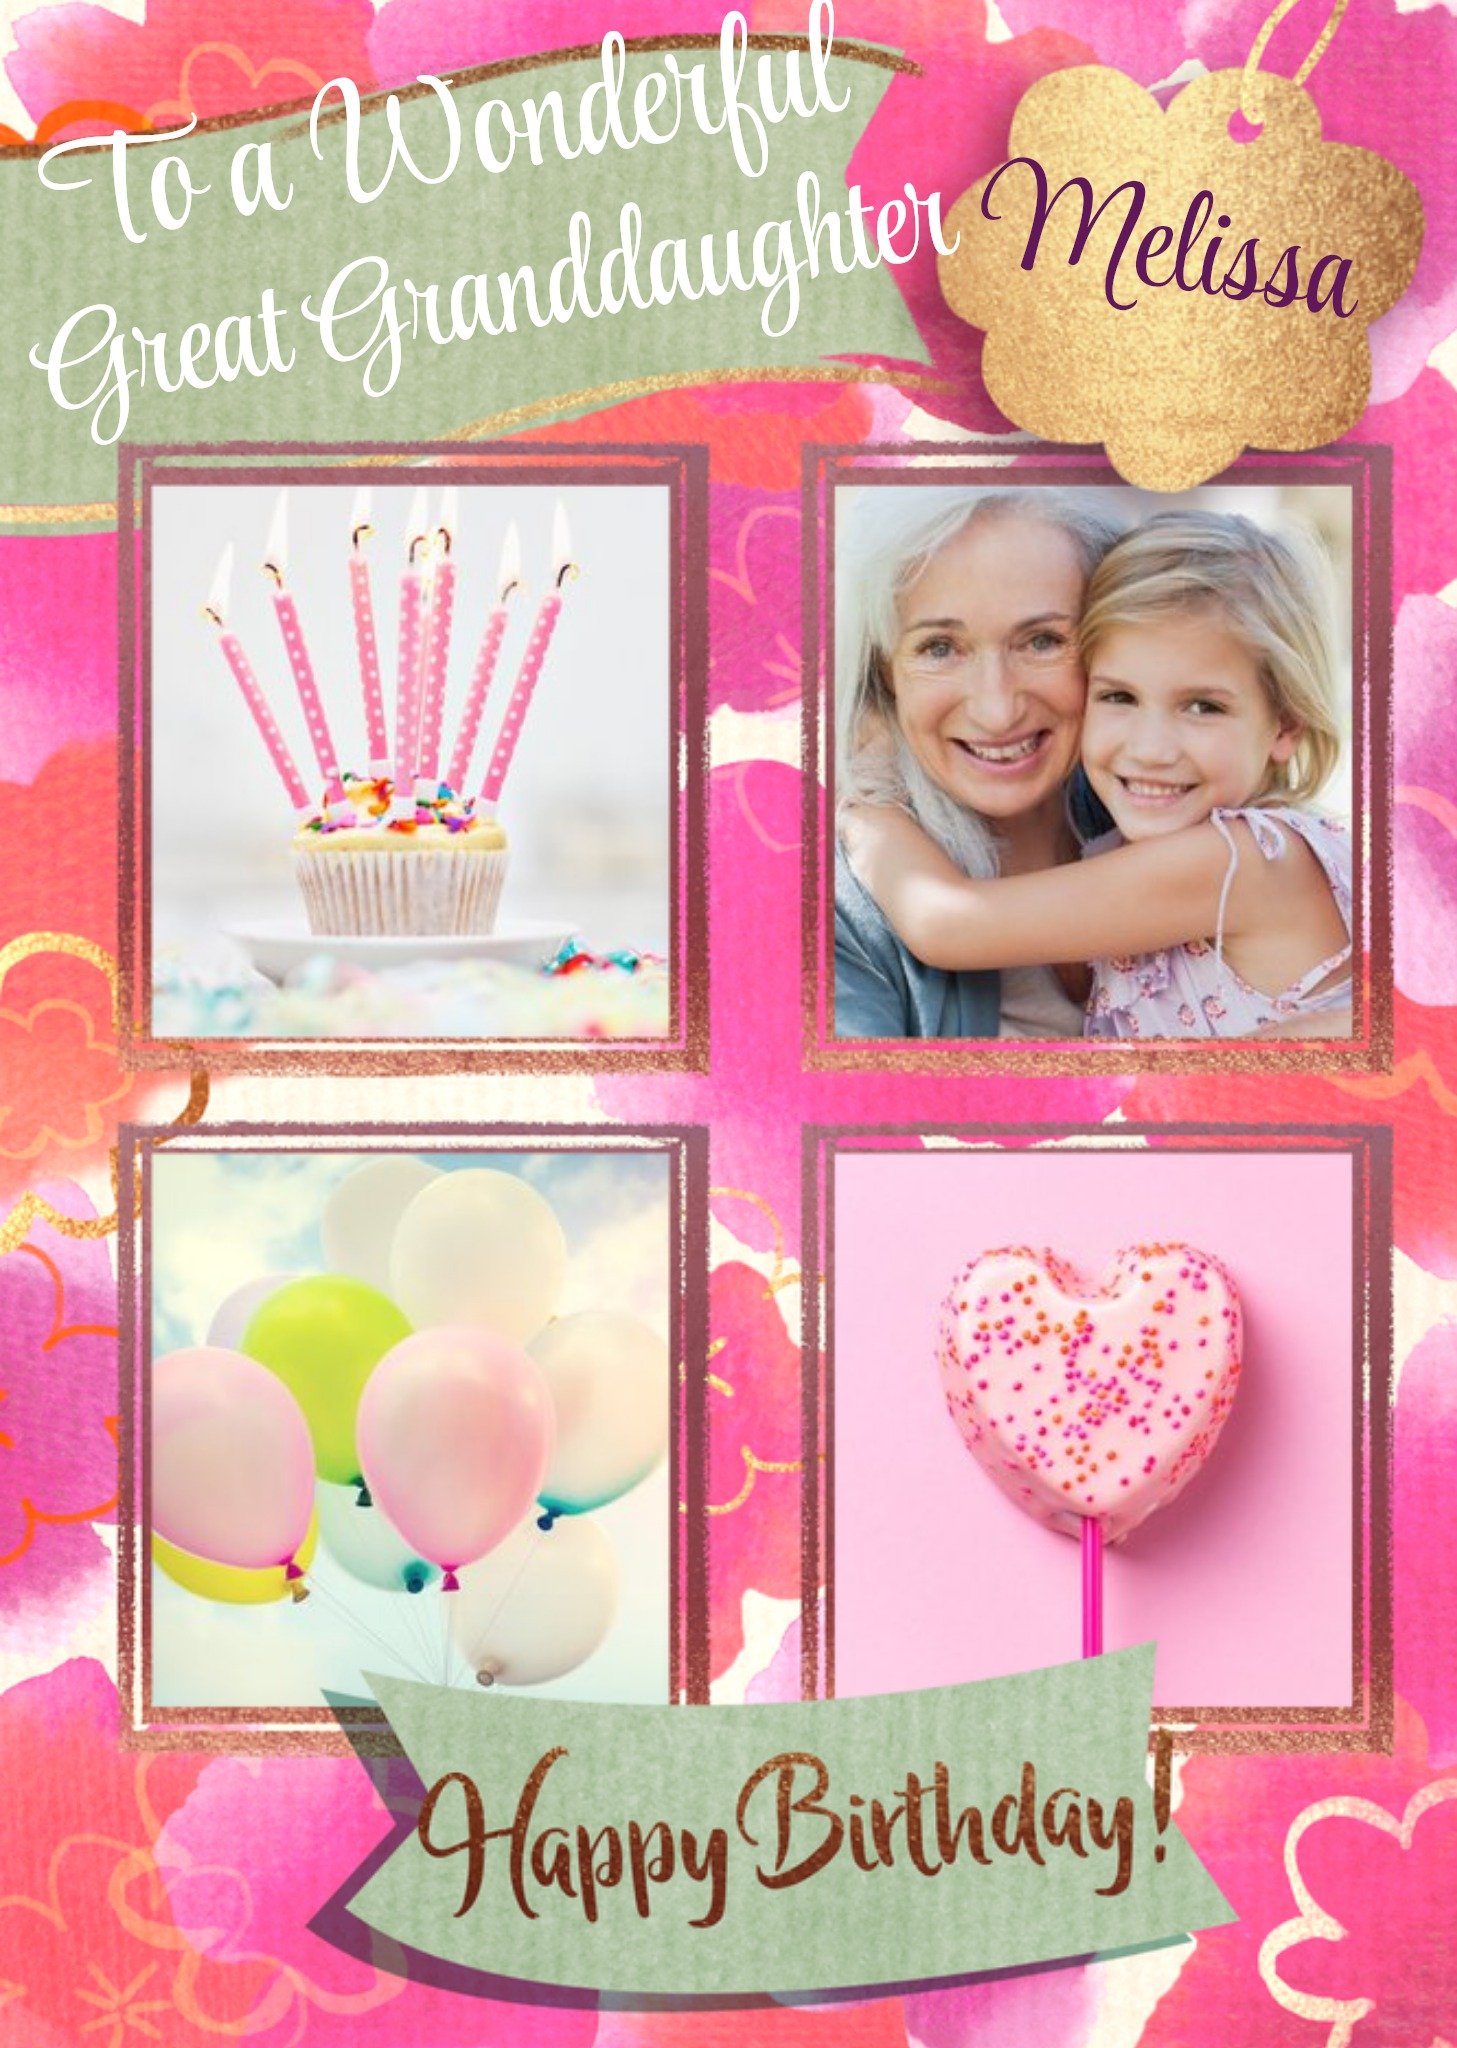 Moonpig To A Wonderful Great Granddaughter Photo Upload Birthday Card Ecard